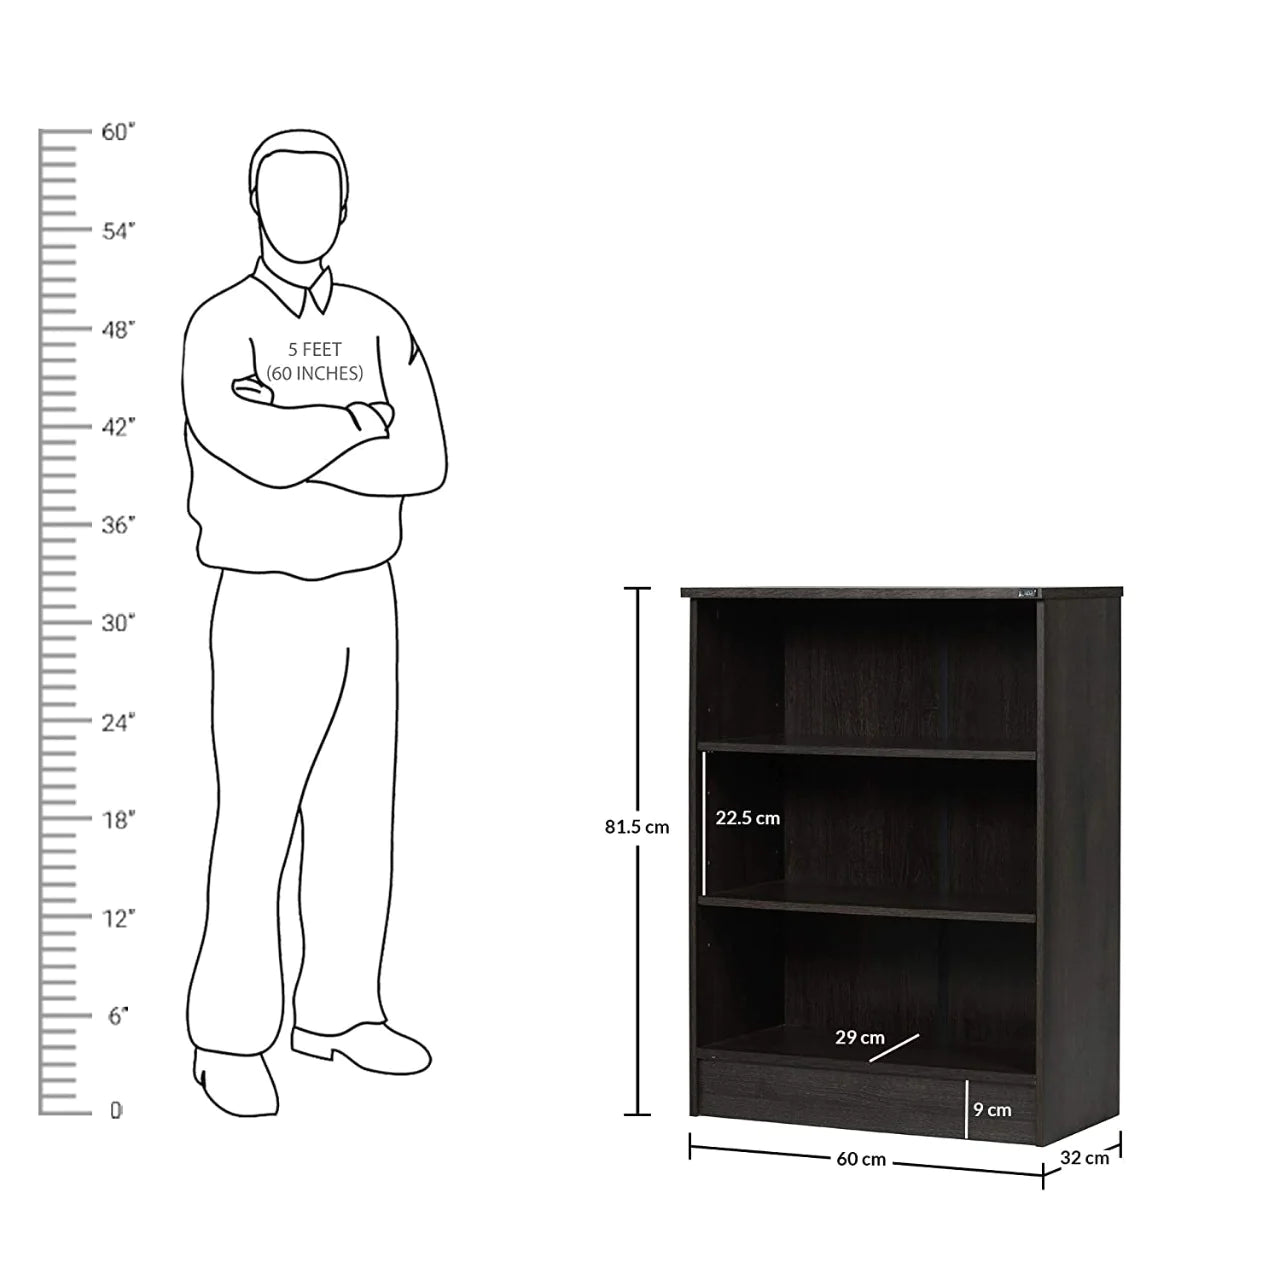 Bookshelf: Black Wide 3-Shelf Bookcase